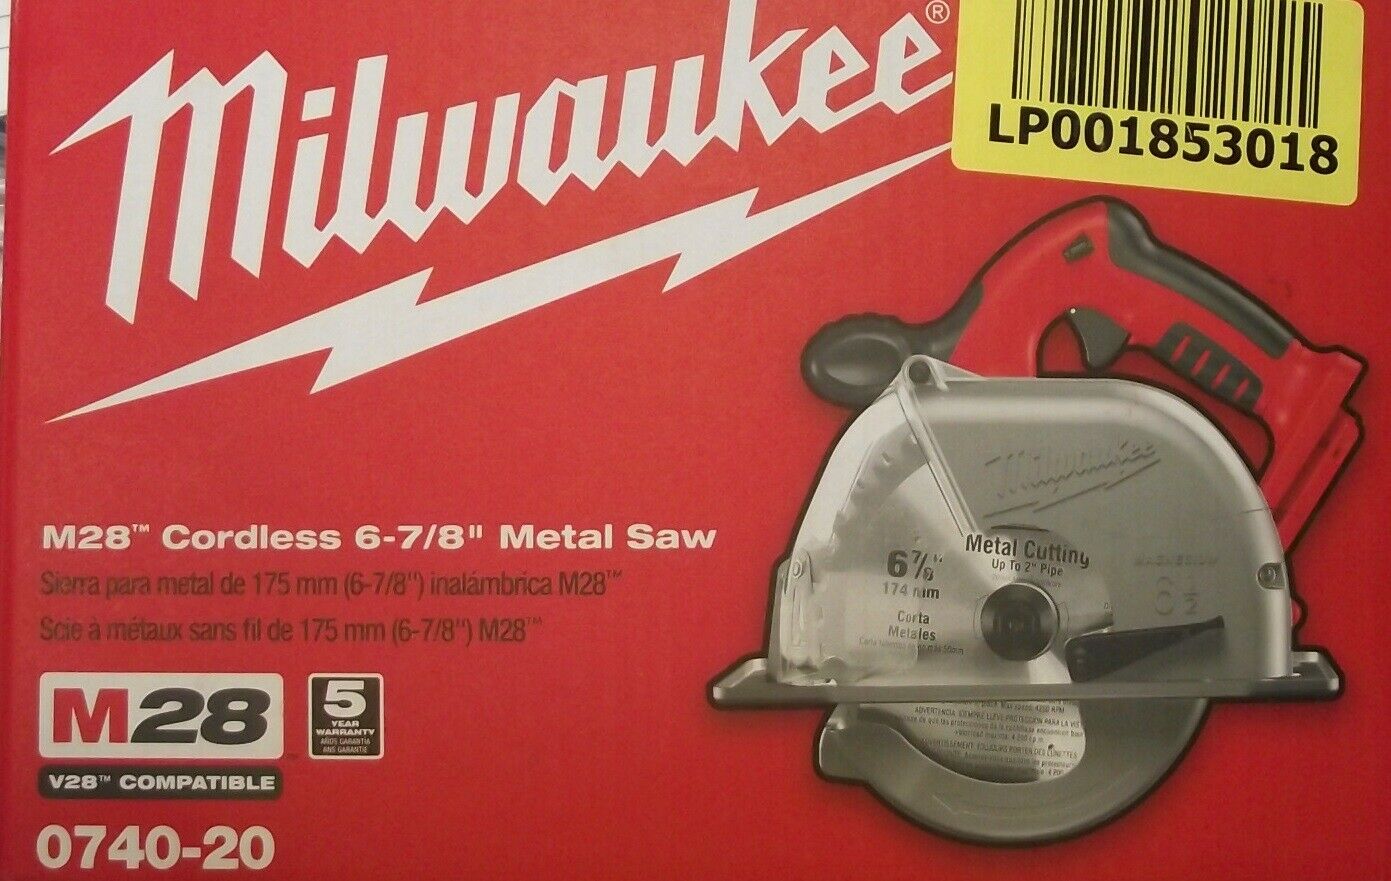 MILWAUKEE 0740-20 M28 Cordless Circular Metal Saw 6-7/8" Bare Tool